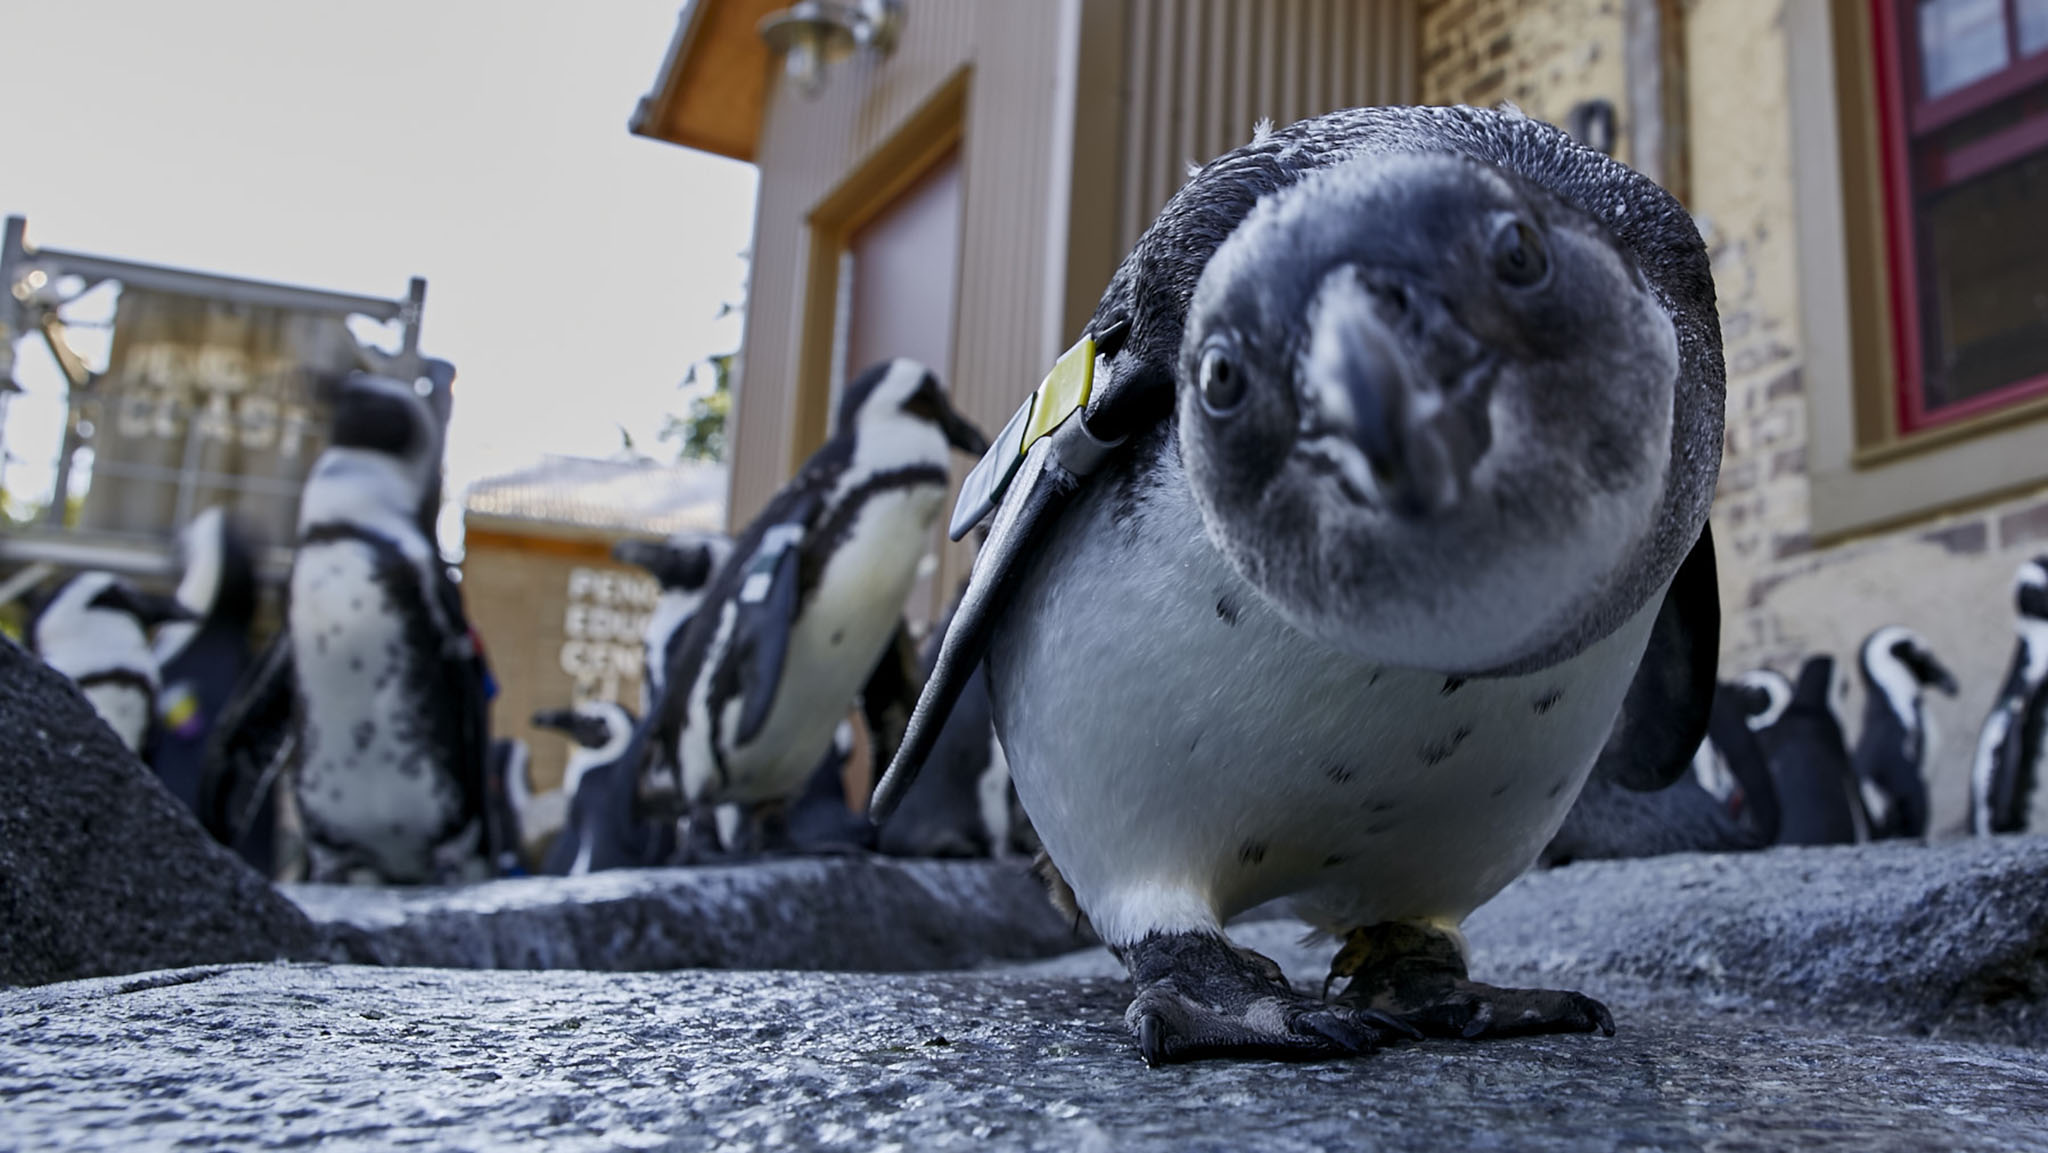 Penguin Encounters | The Maryland Zoo2048 x 1153